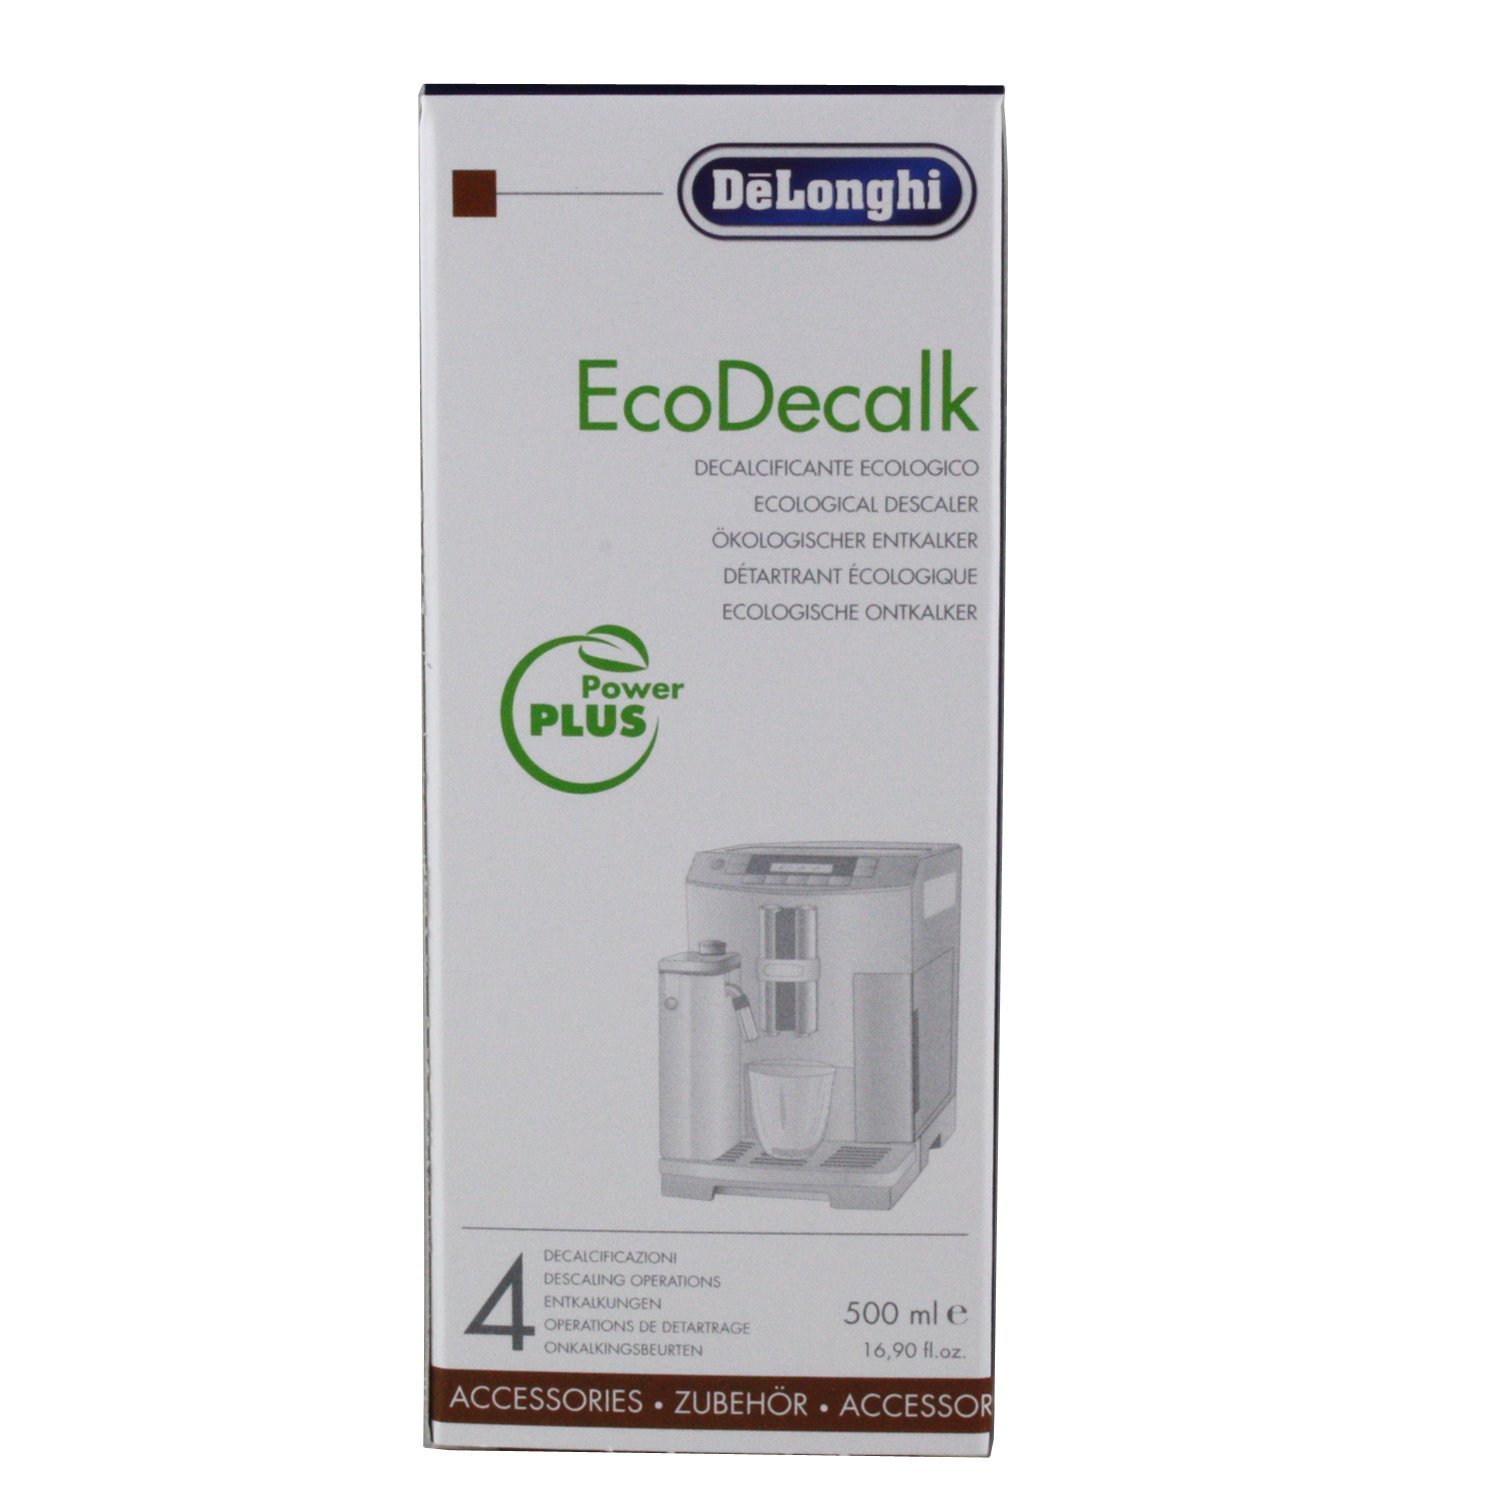 Delonghi Descaler ecodecalk 500ml – The Fridge Filter Shop